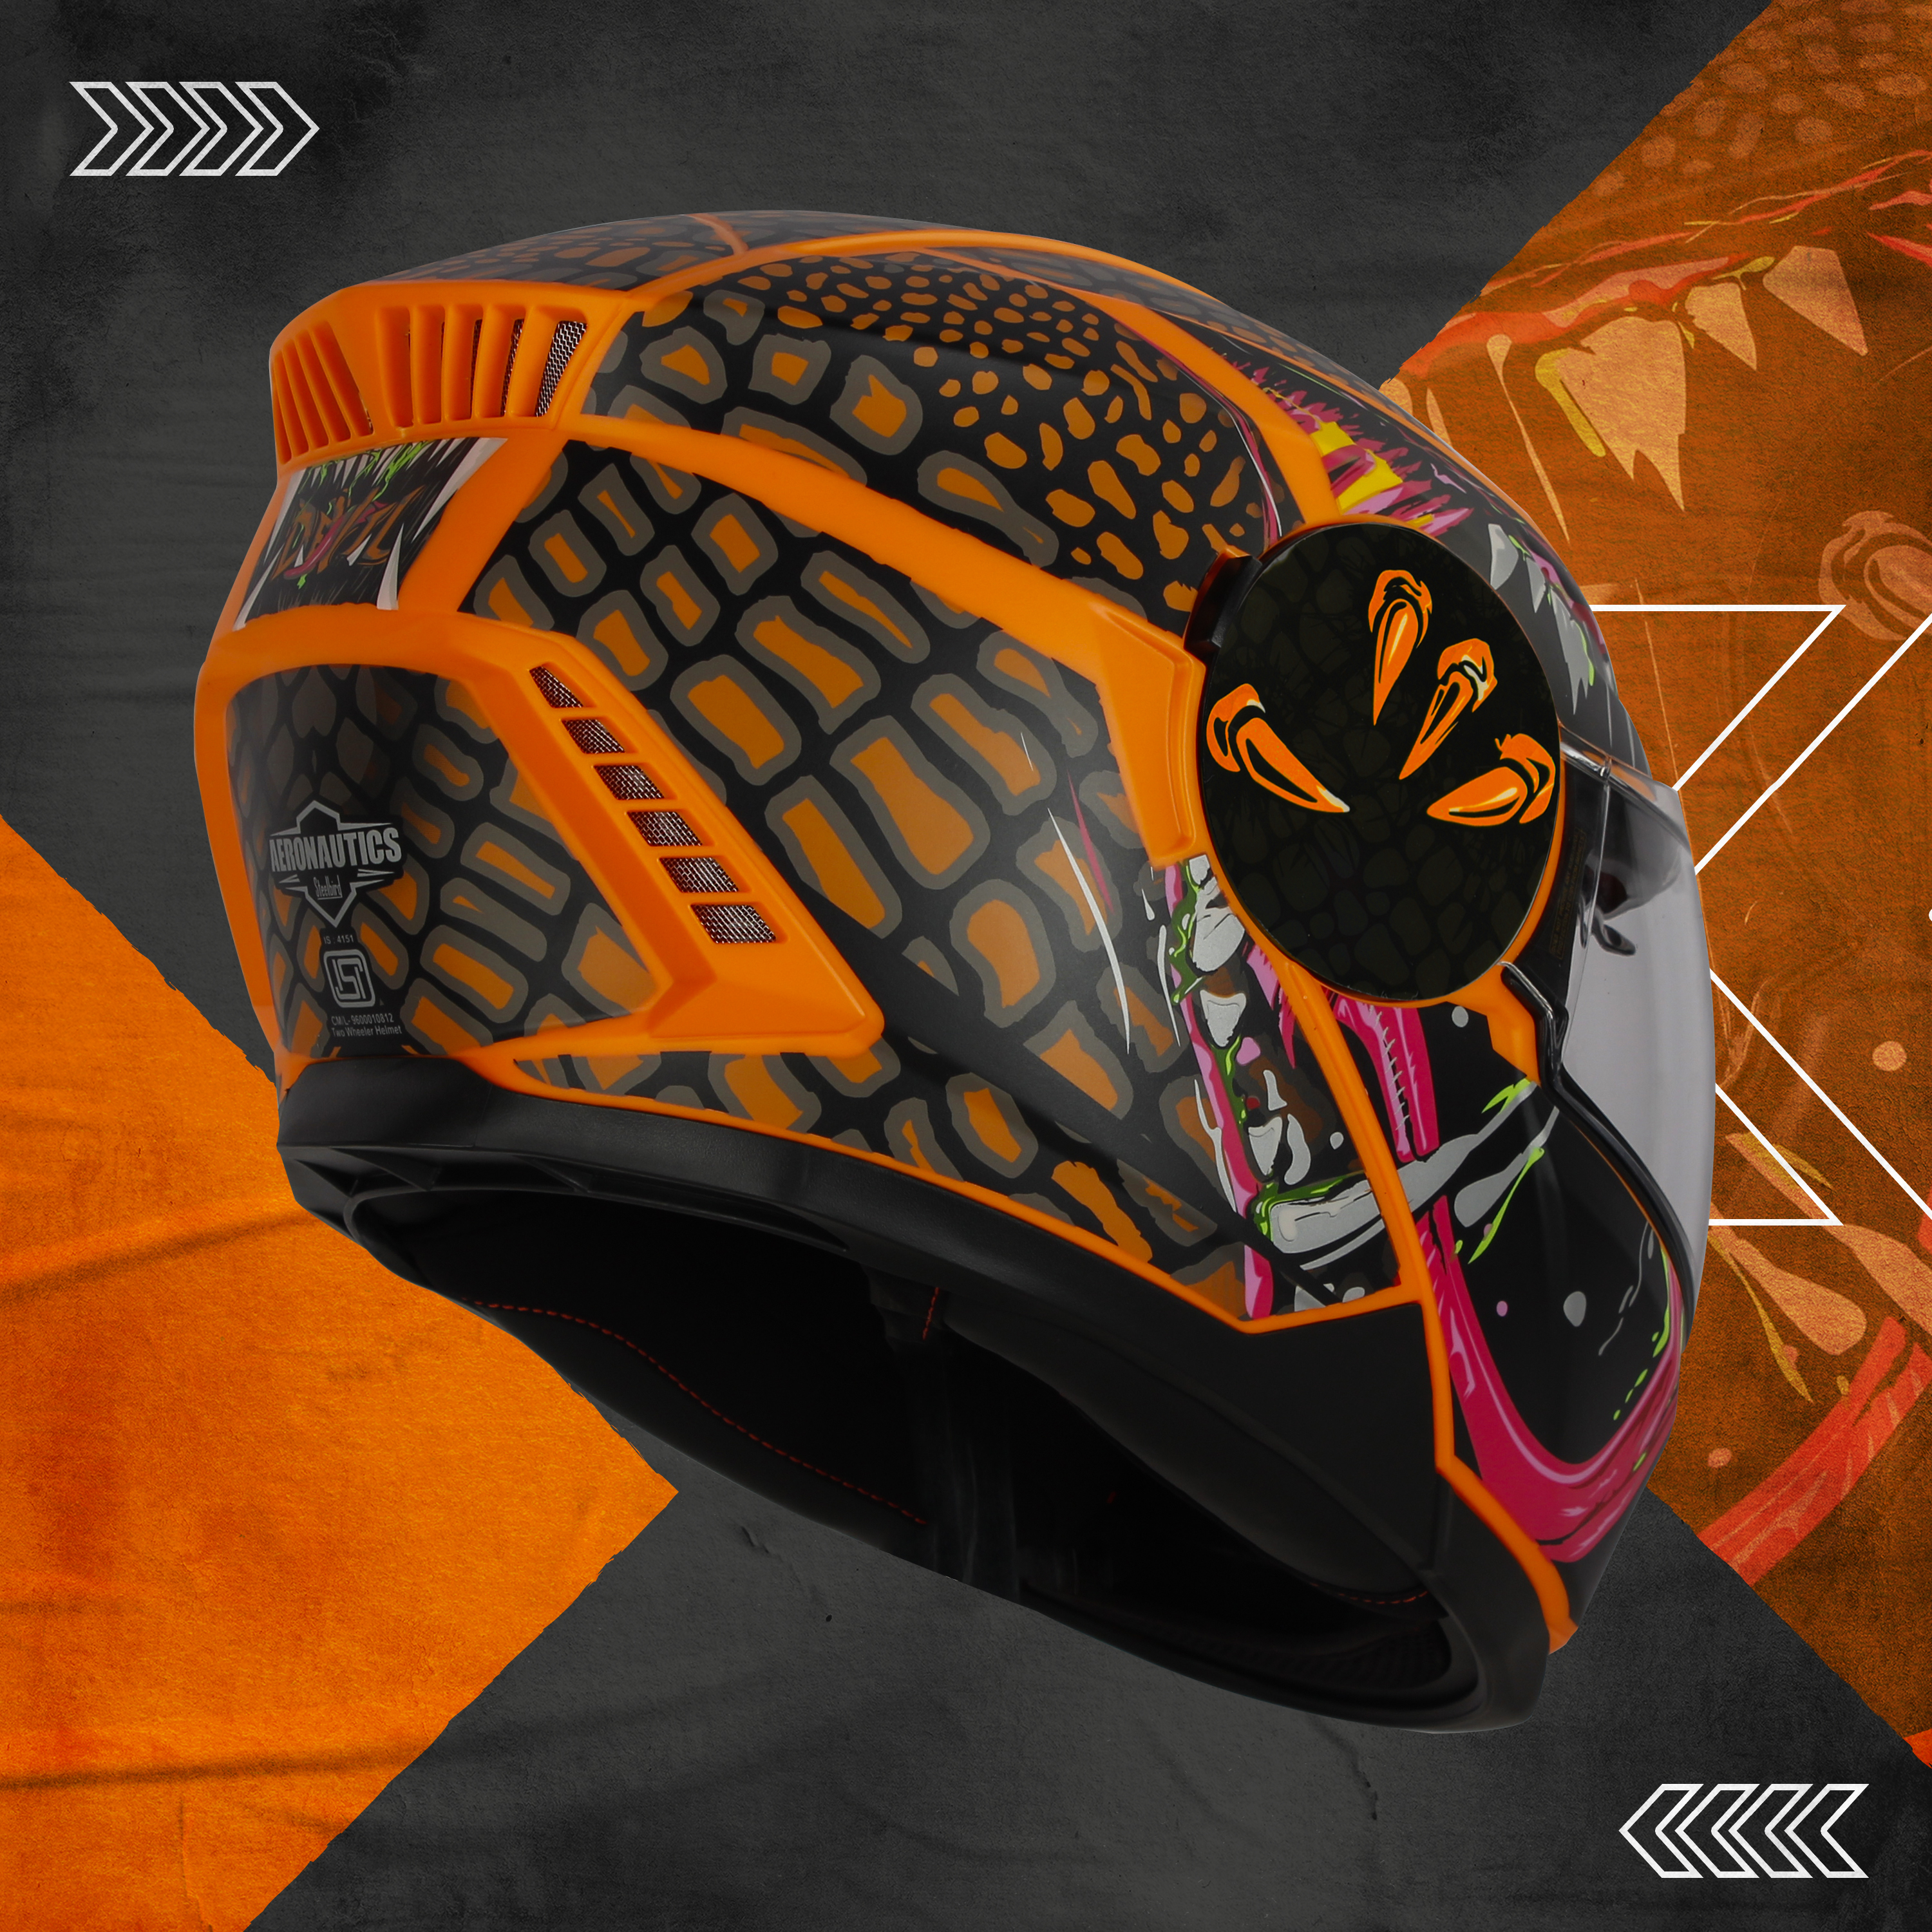 Steelbird SBH-40 Devil ISI Certified Full Face Helmet For Men And Women With Inner Smoke Sun Shield (Matt Jazz Orange Orange)